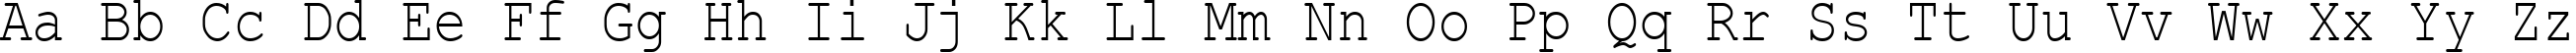 Пример написания английского алфавита шрифтом Courier New Cyr_85n